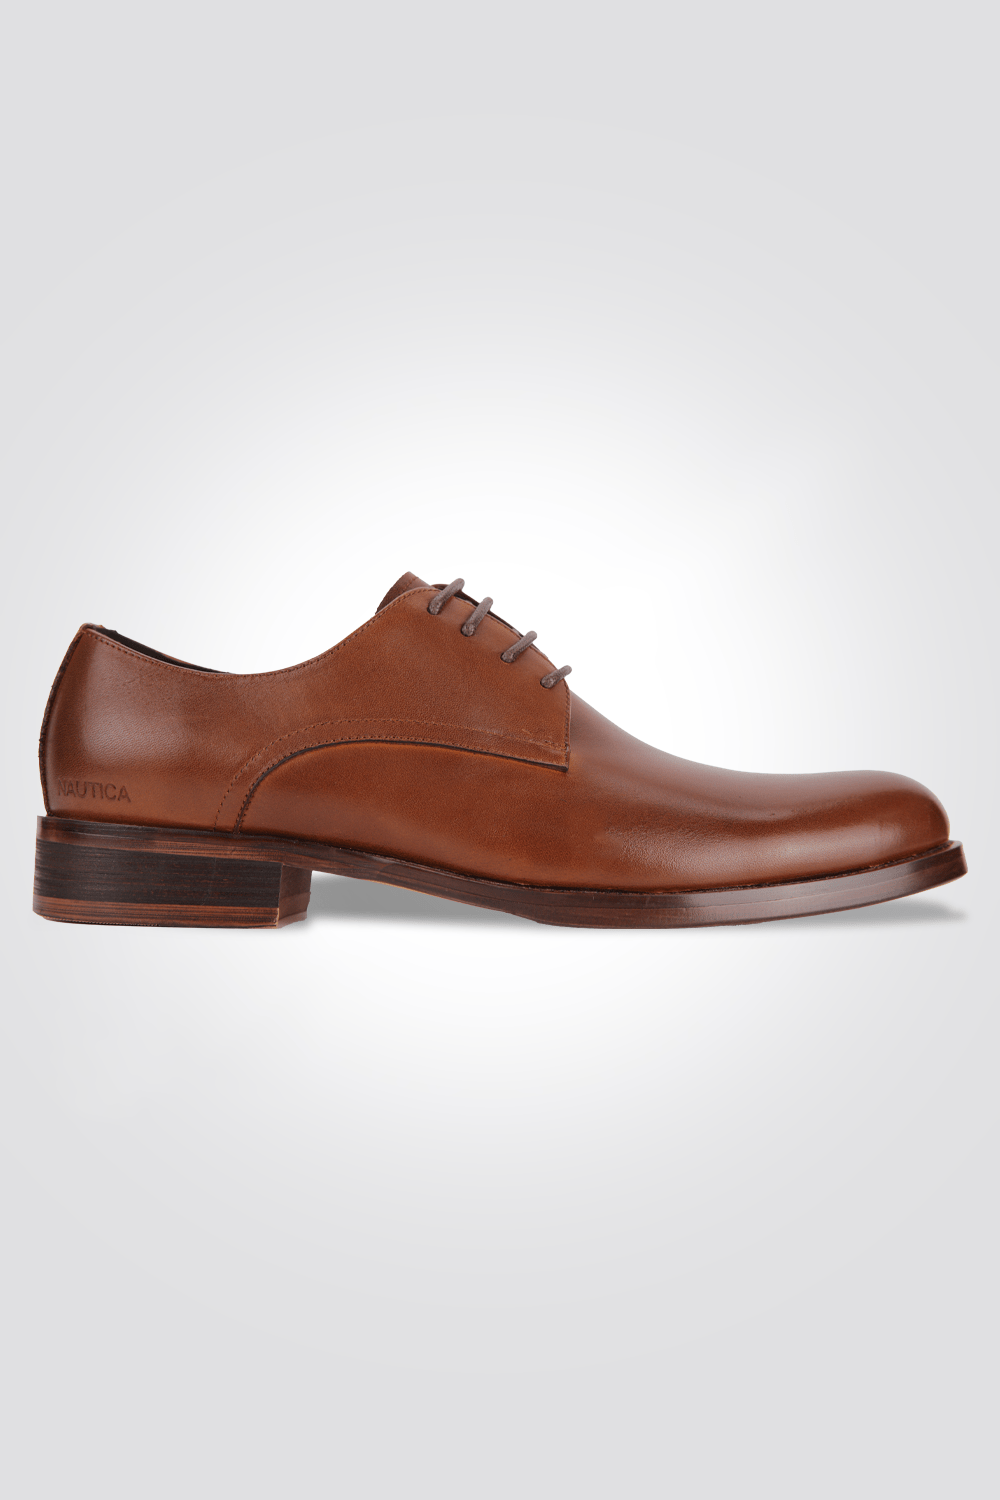 NAUTICA - נעליים אלגנטיות מעור לגברים בצבע חום עם שרוכים - MASHBIR//365